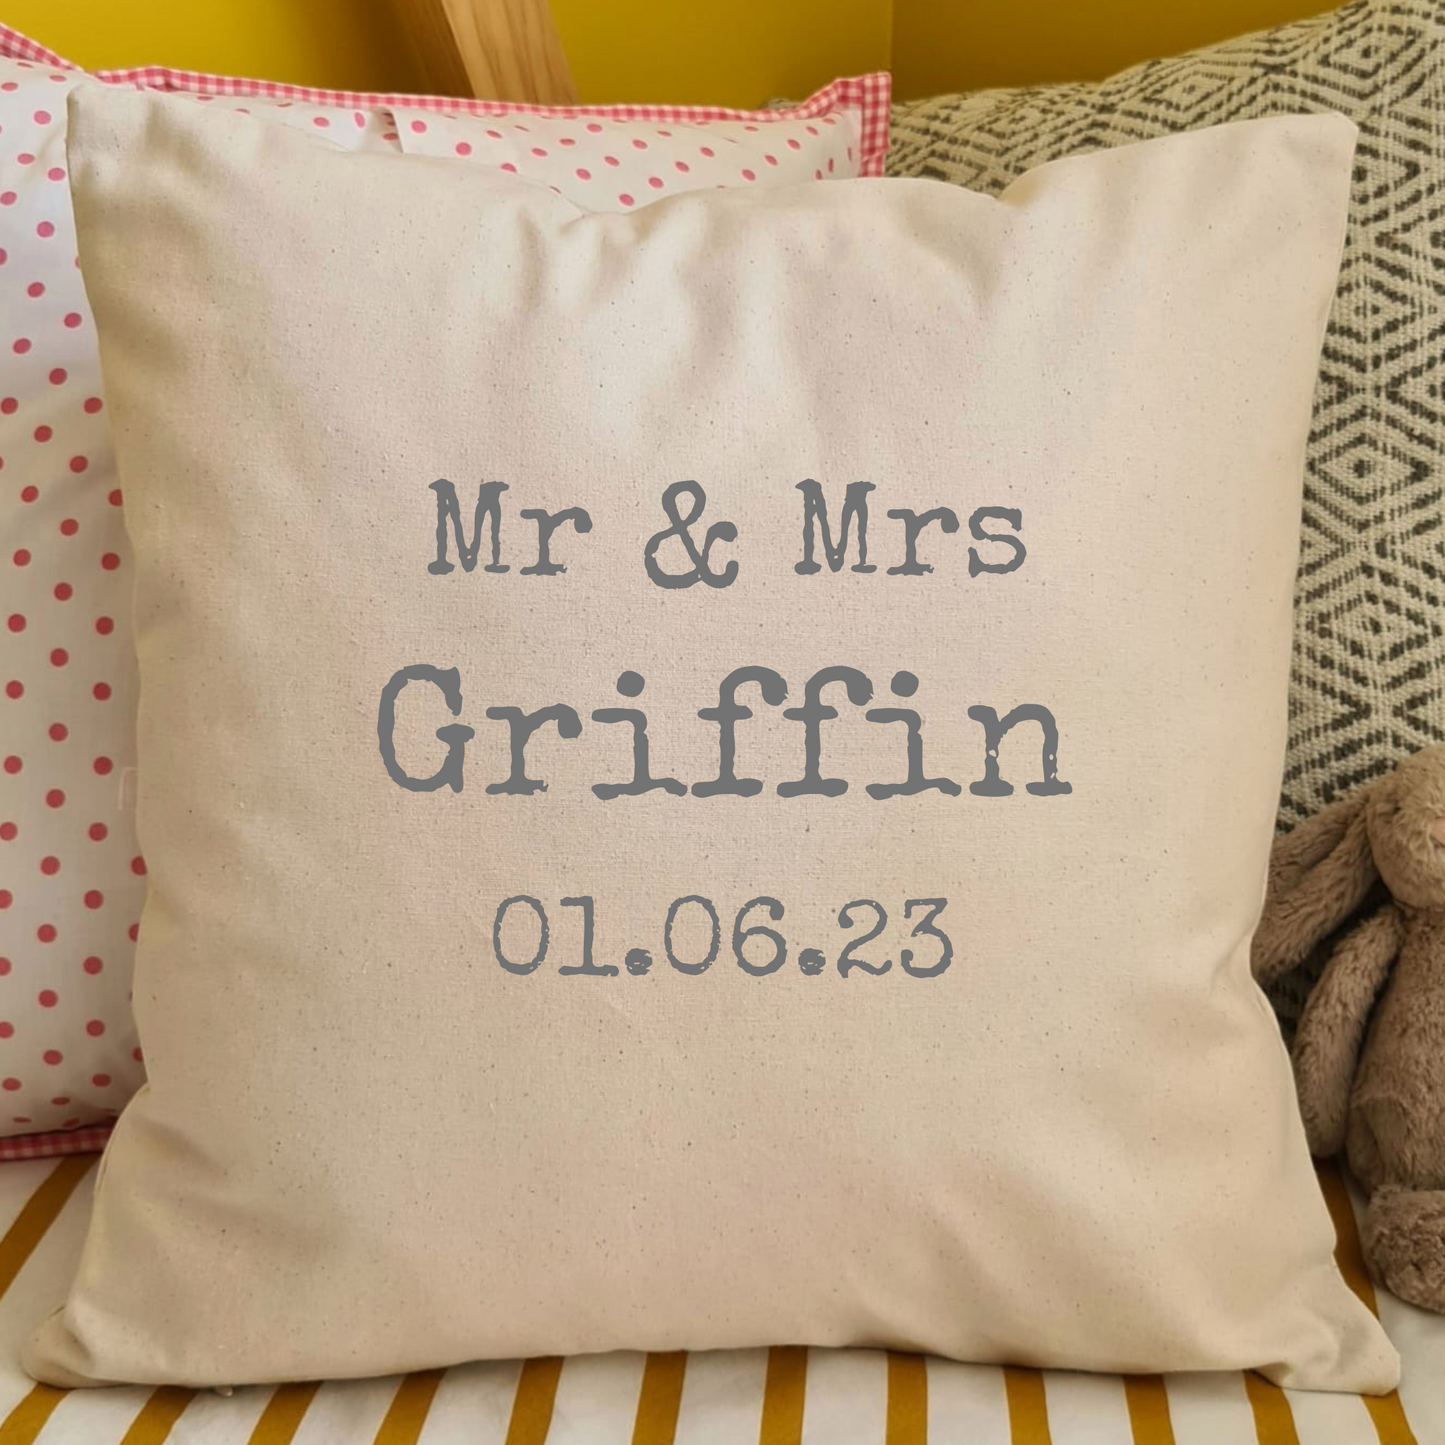 Mr & Mrs Cushion Cover - Fairtrade Cotton